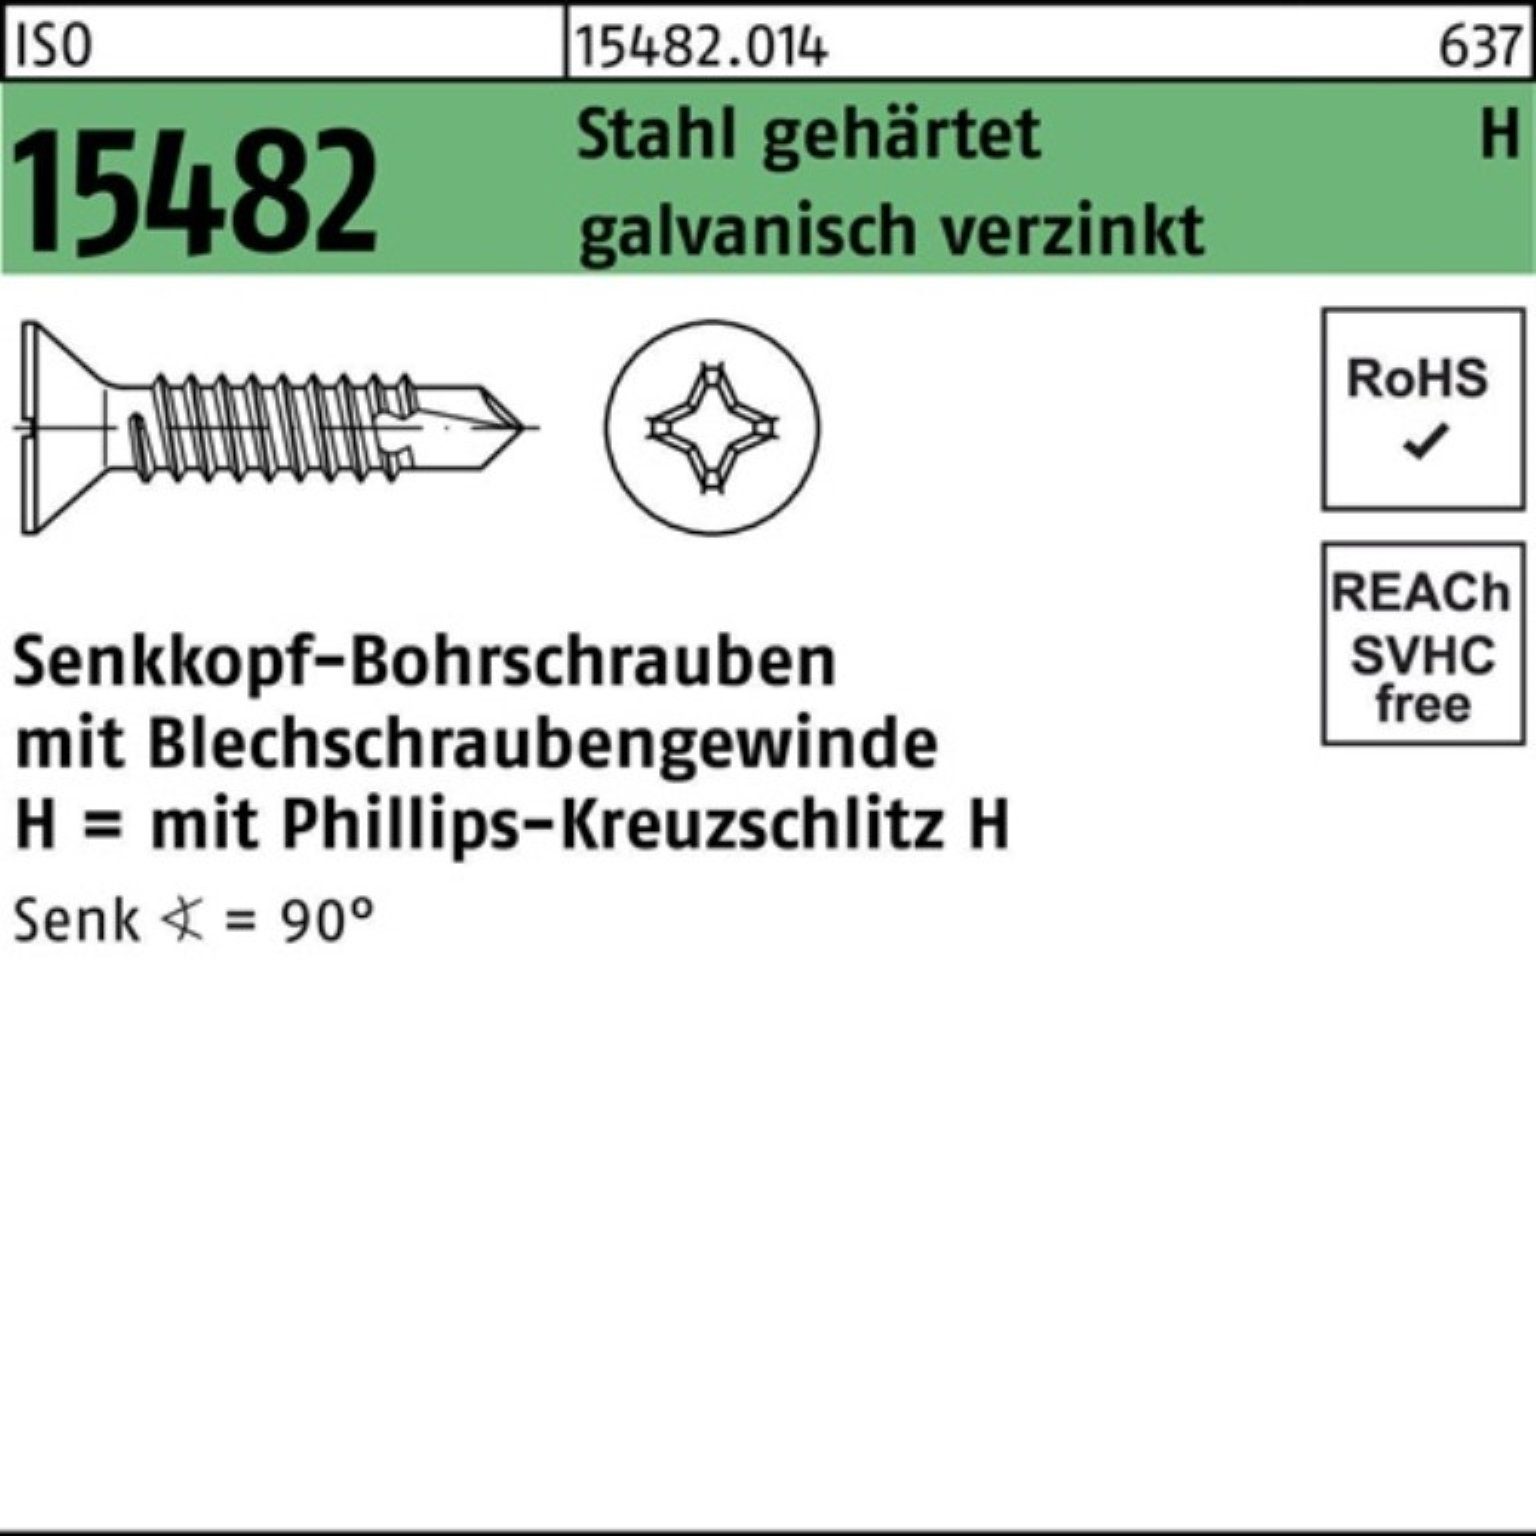 Pack Bohrschraube ISO ST Stahl Senkbohrschraube gehärtet 4,8x19-H PH 15482 Reyher 1000er